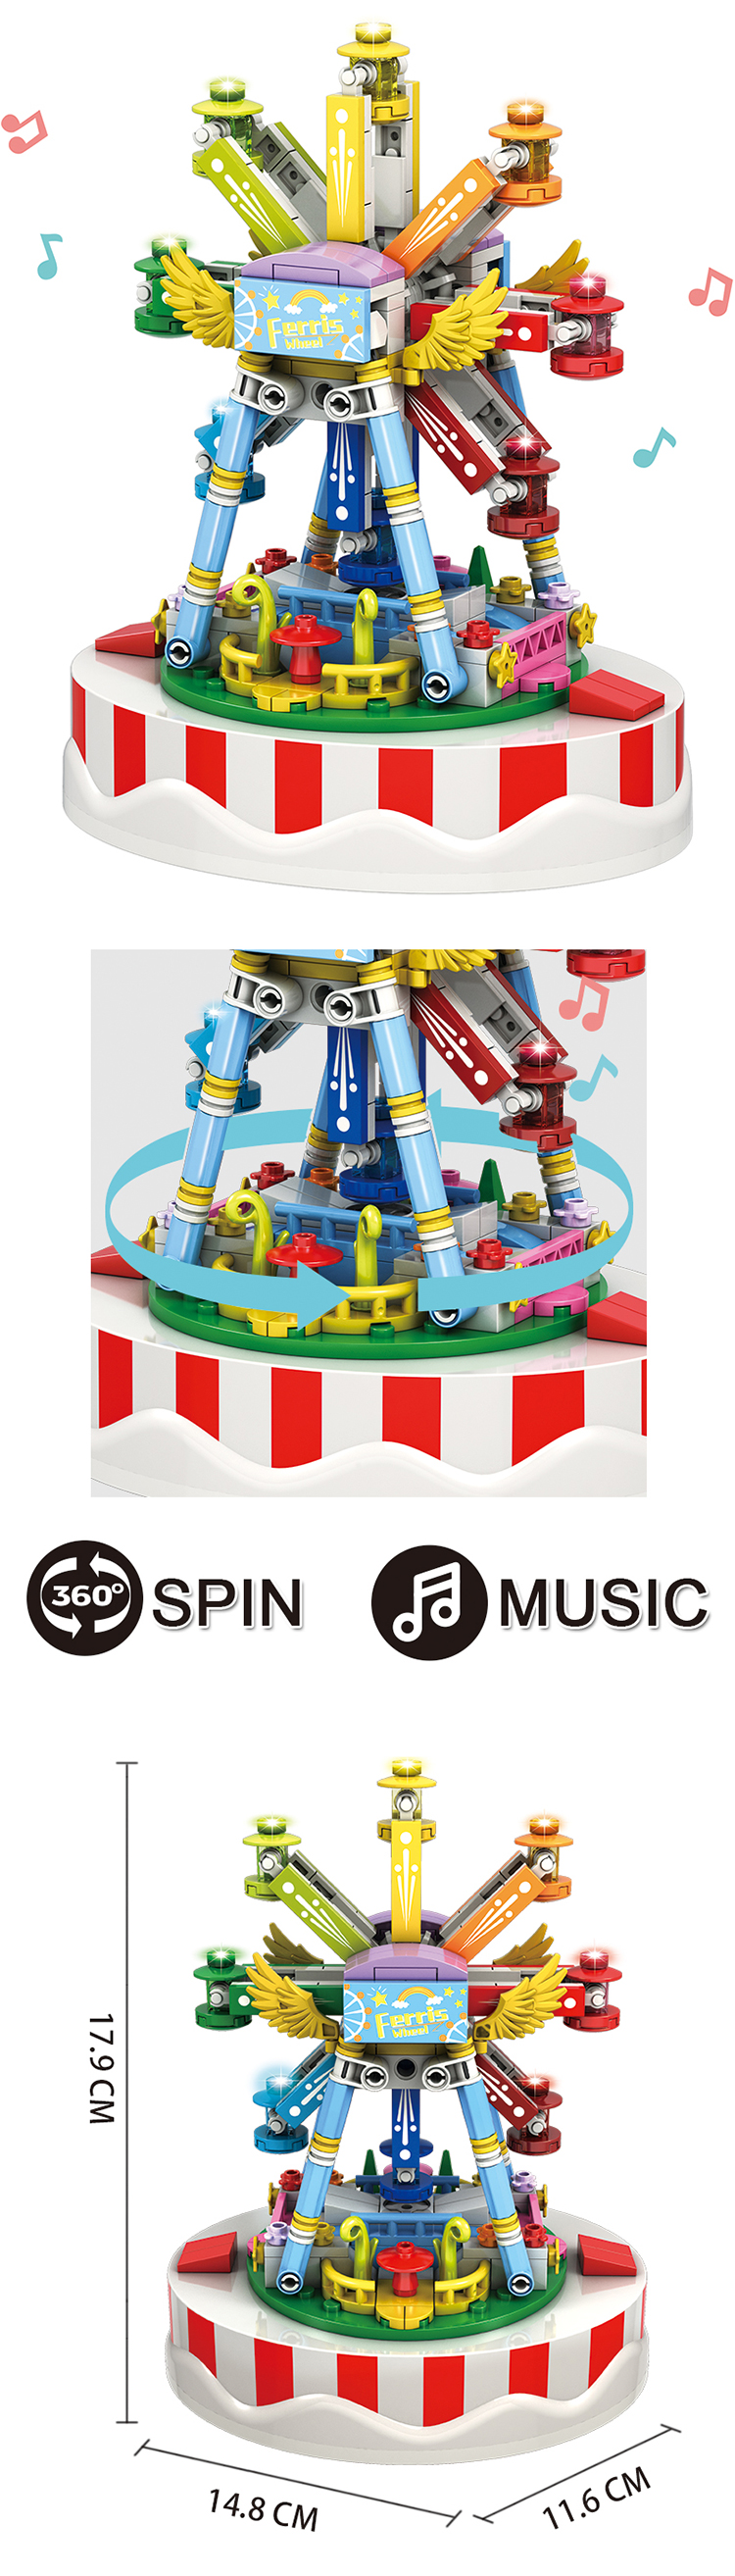 WOMA TOYS children birthday Christmas Gifts Spin Play Music Box Ferris wheel model diy building blocks educational bricks toys